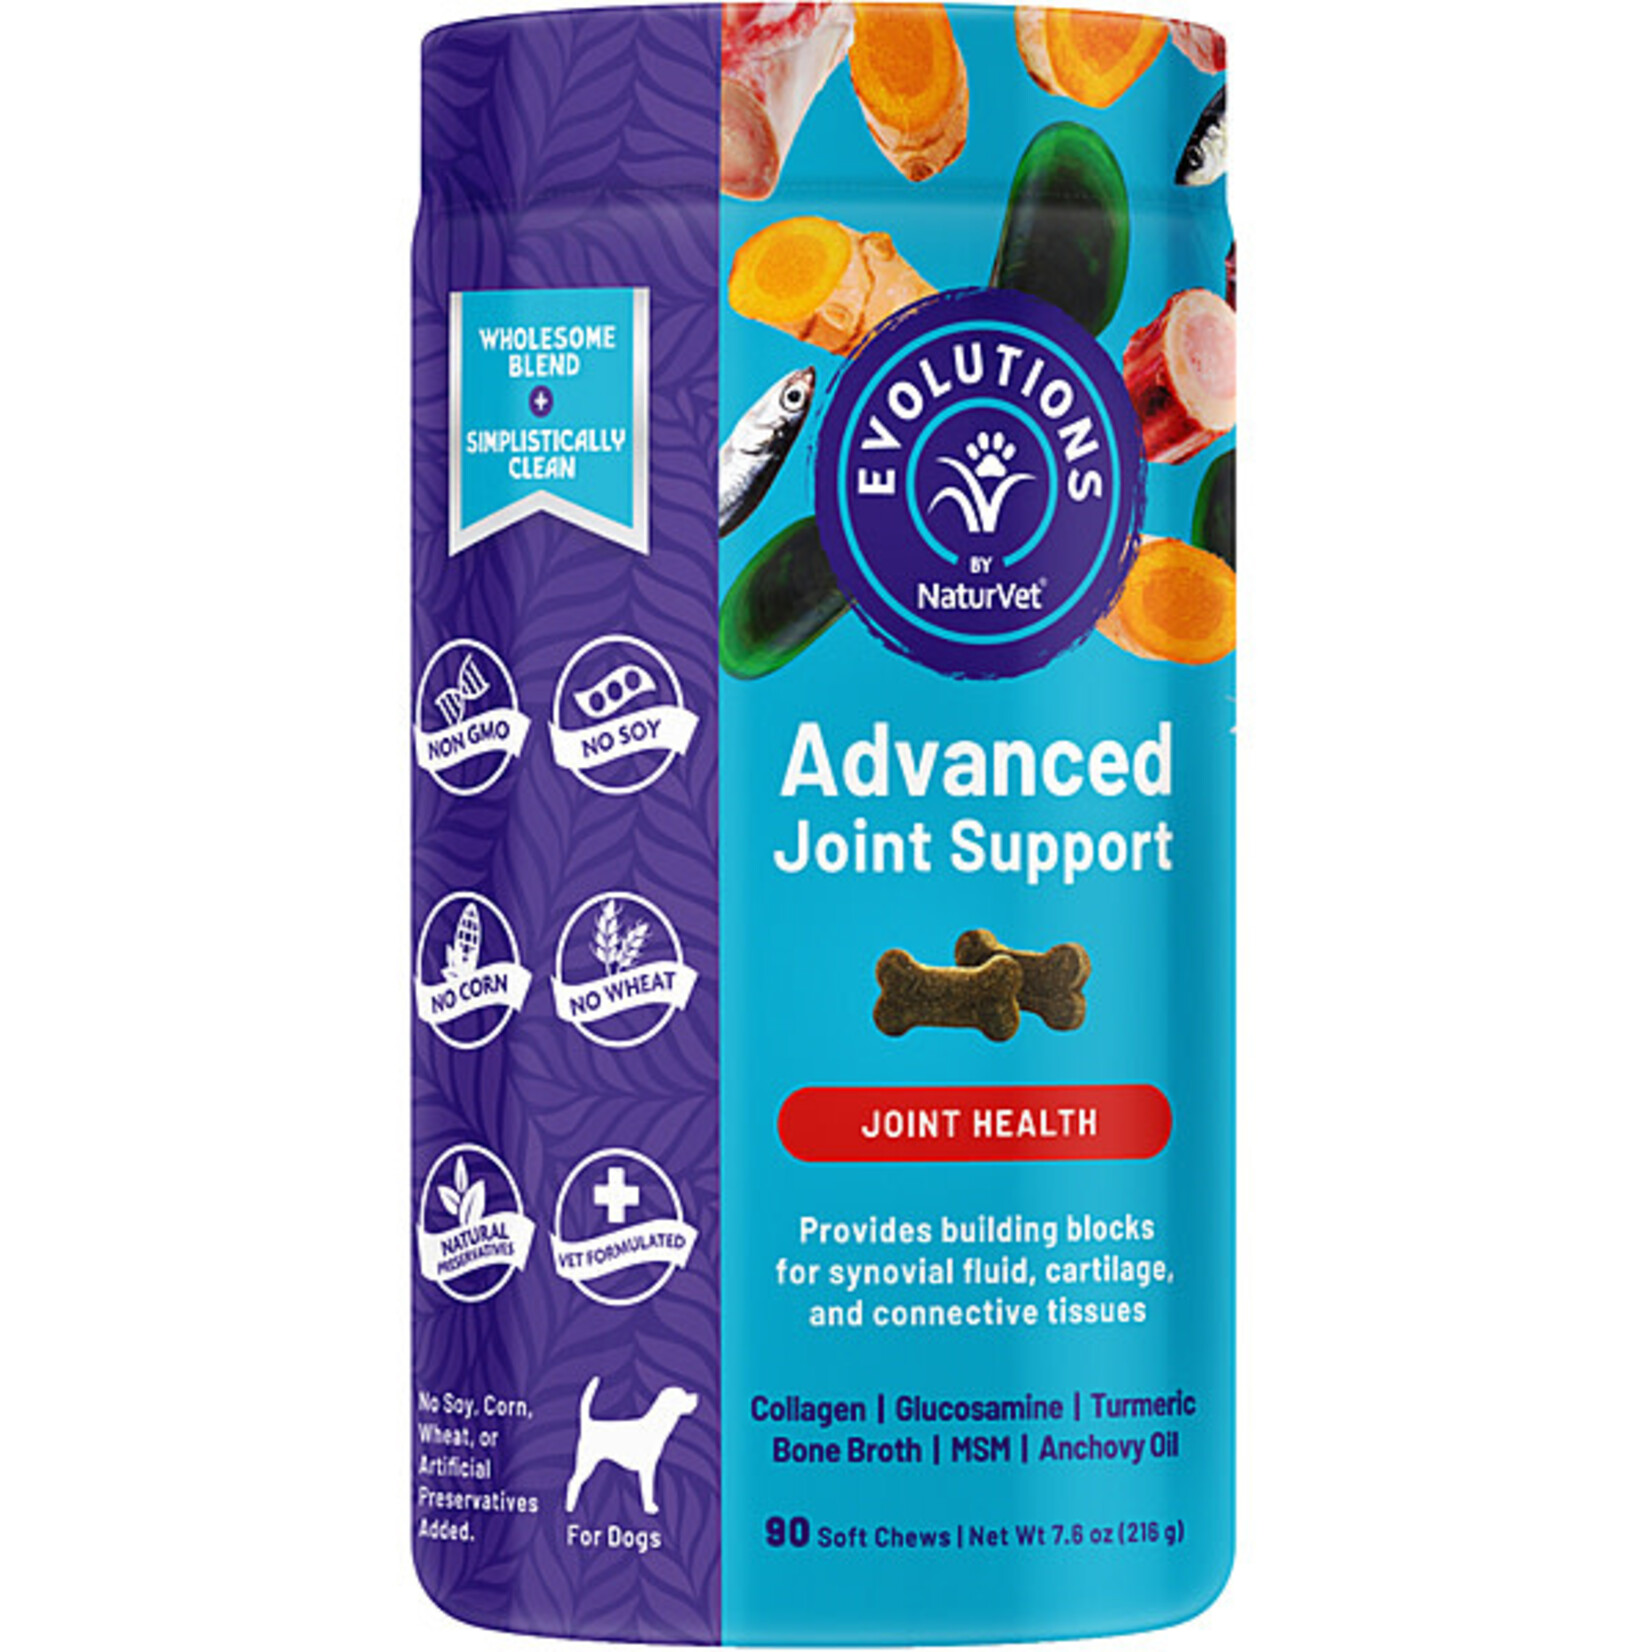 NaturVet Advanced Joint Support 90 soft chews